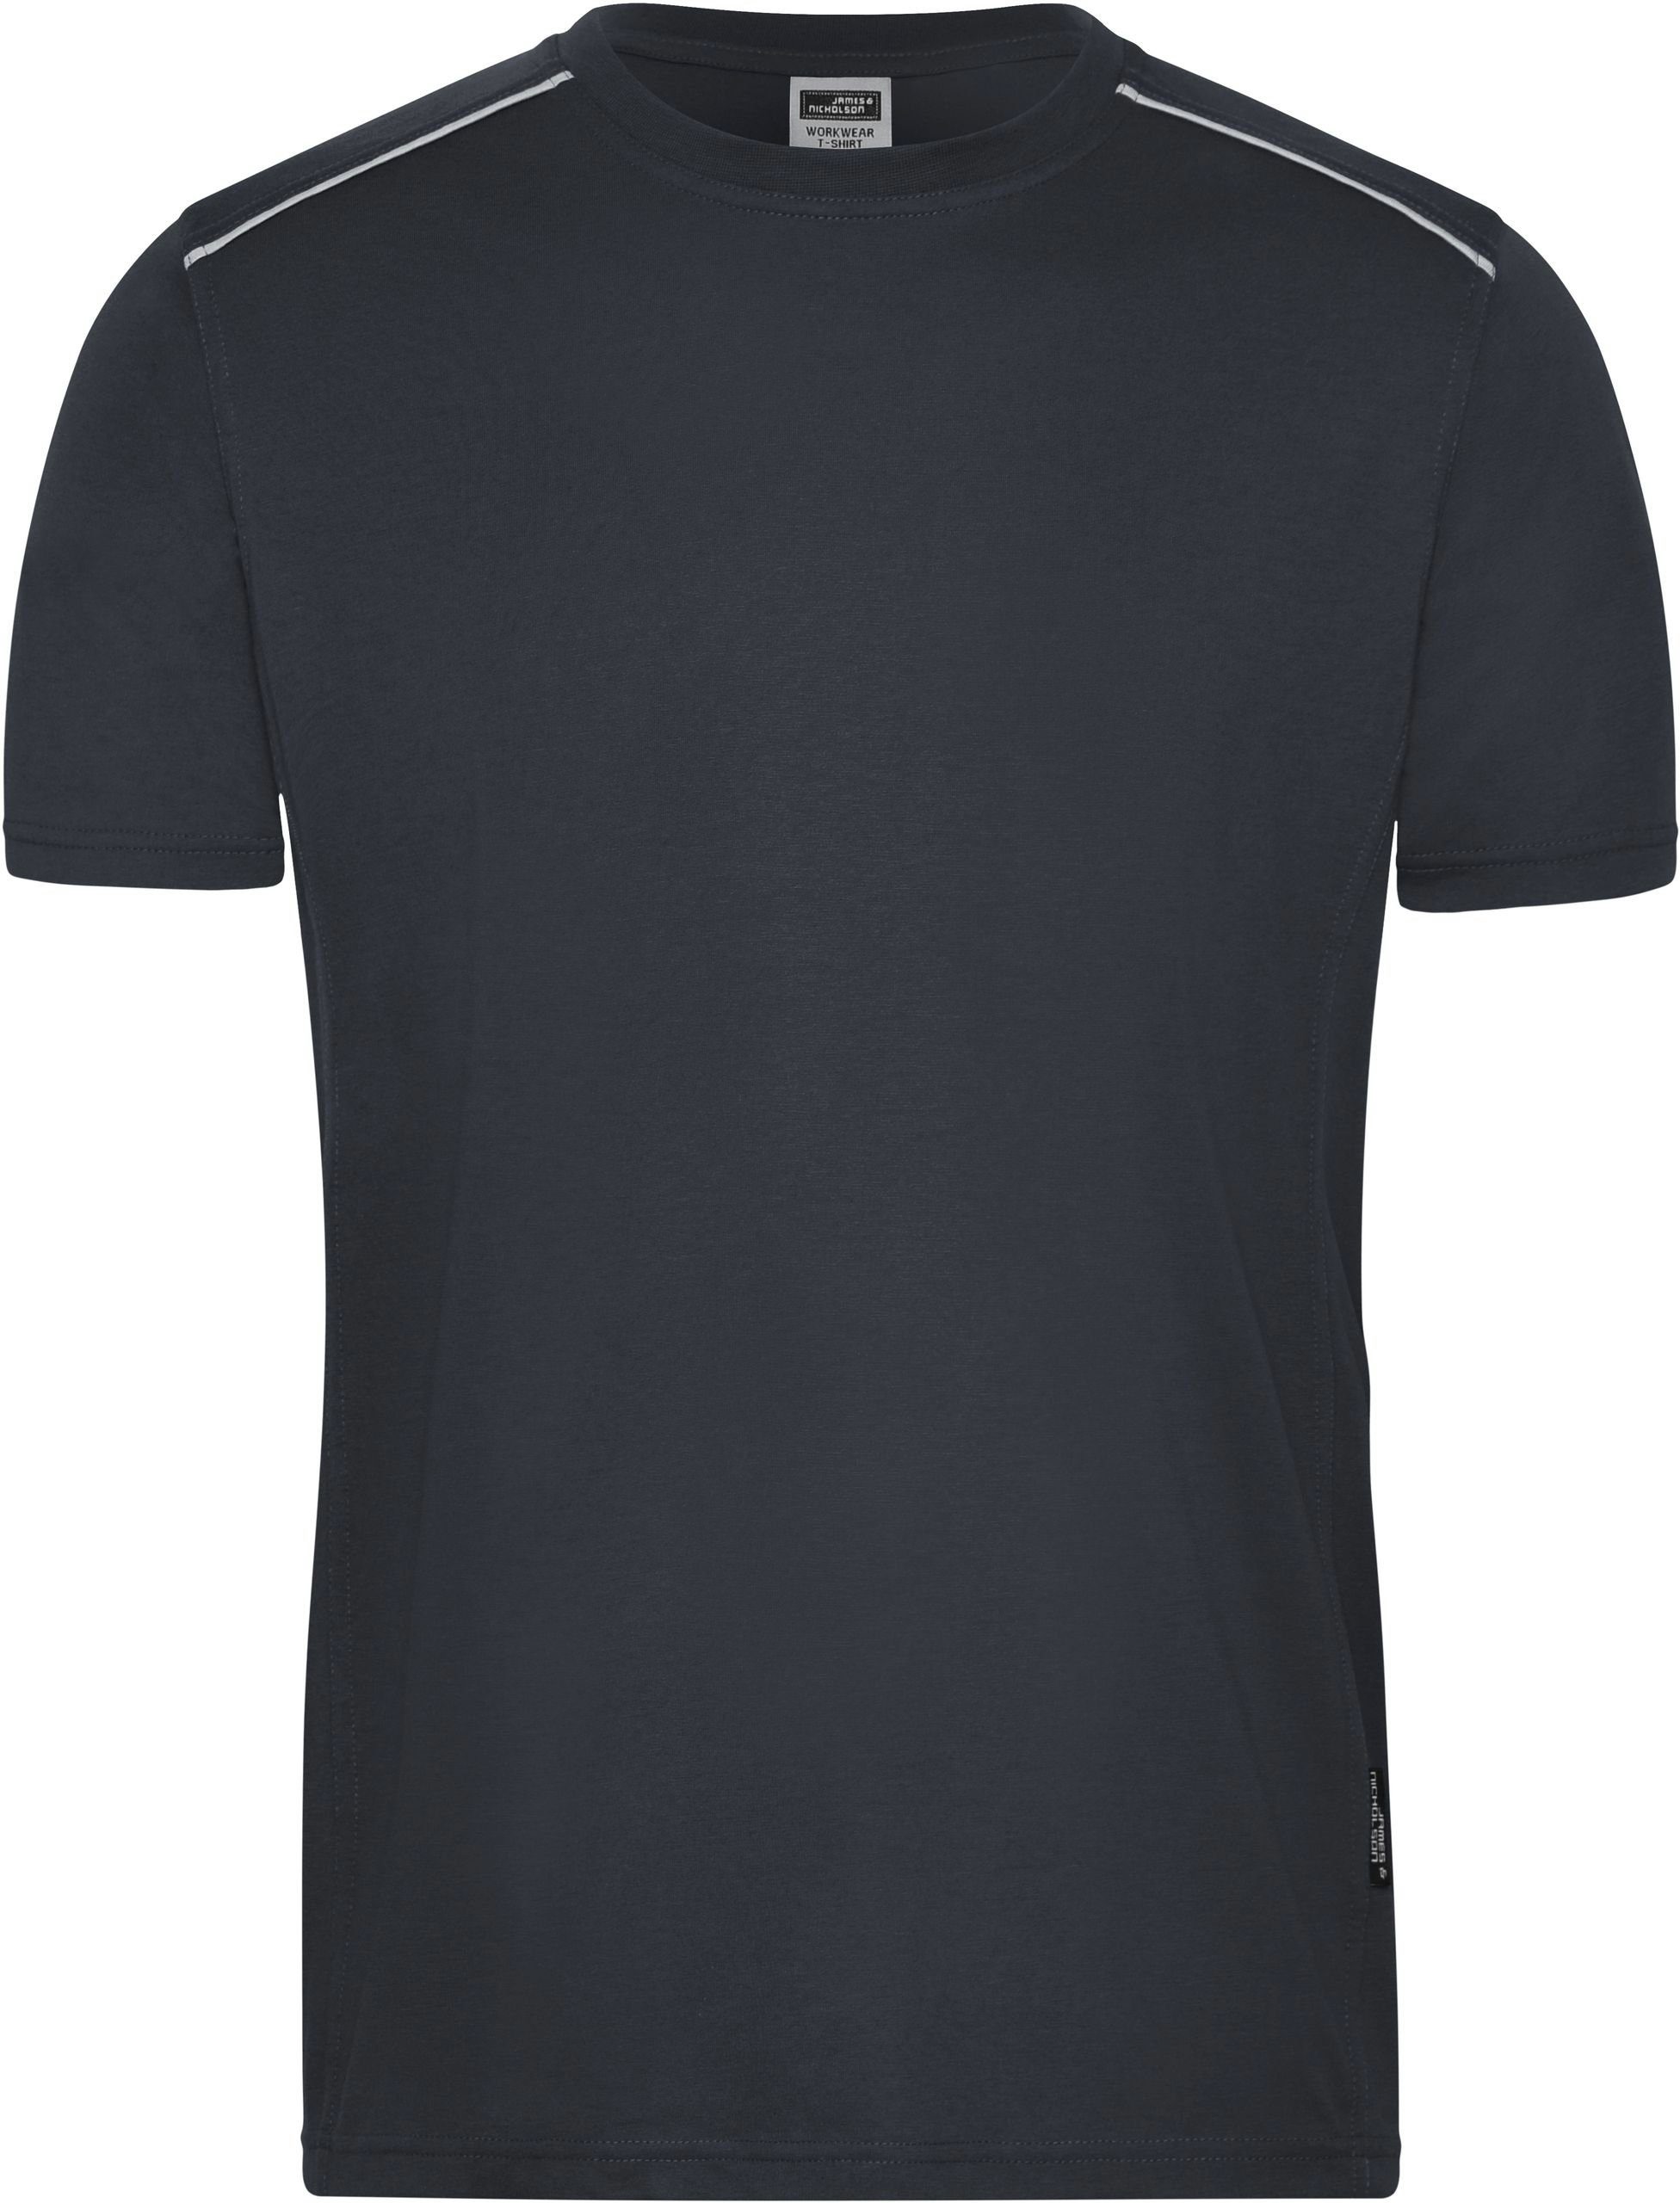 Baumwolle Bio Arbeits James -Solid- Workwear Nicholson & FaS50890 T-Shirt Navy T-Shirt